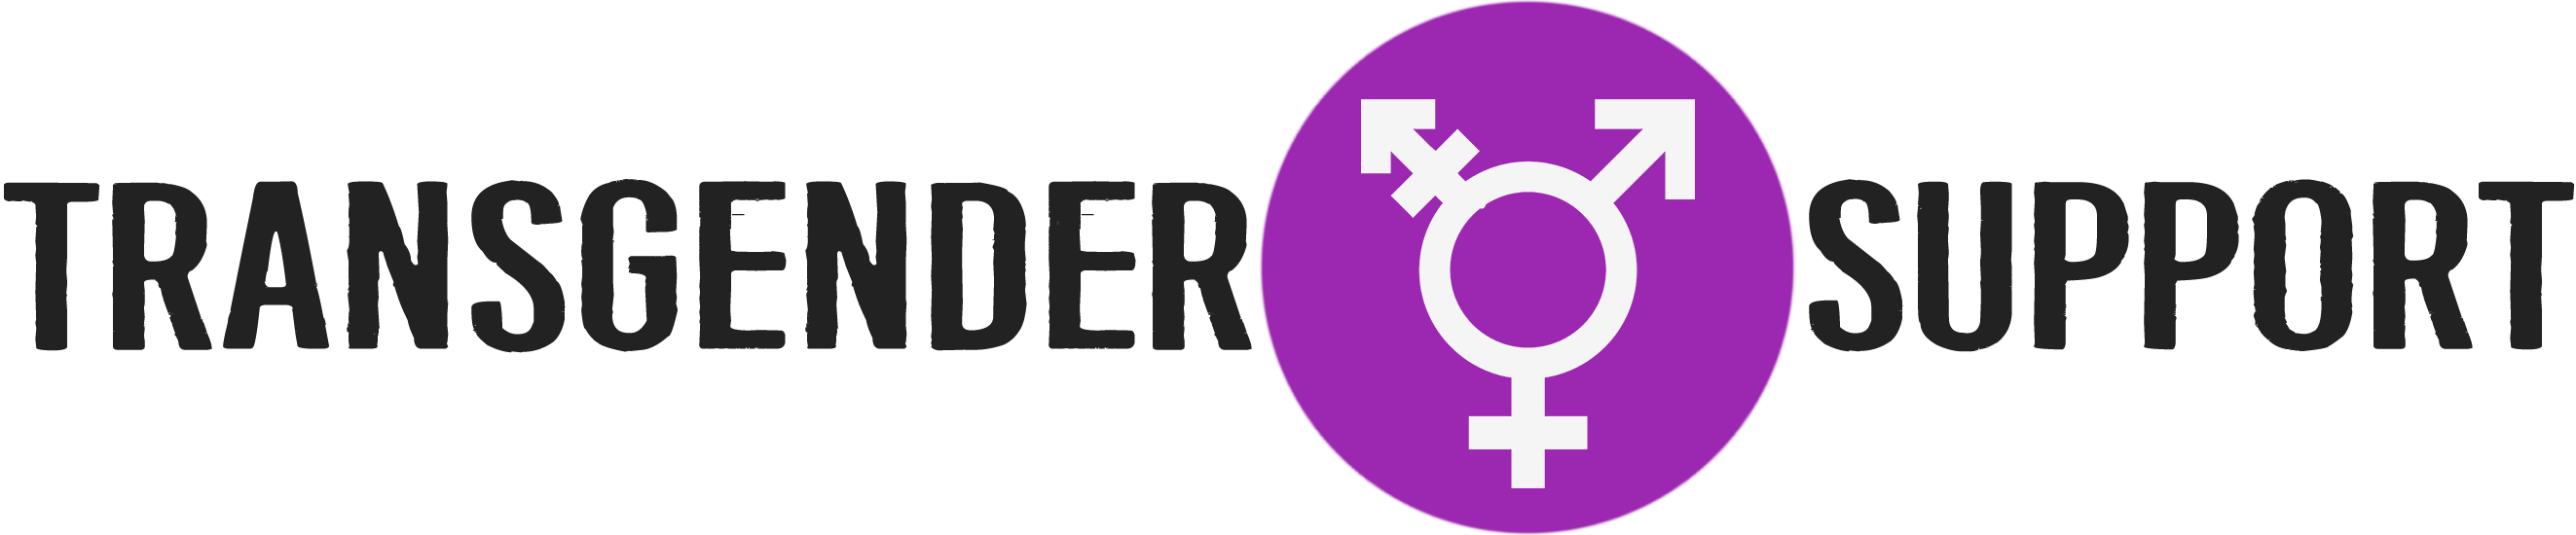 Transgender Support